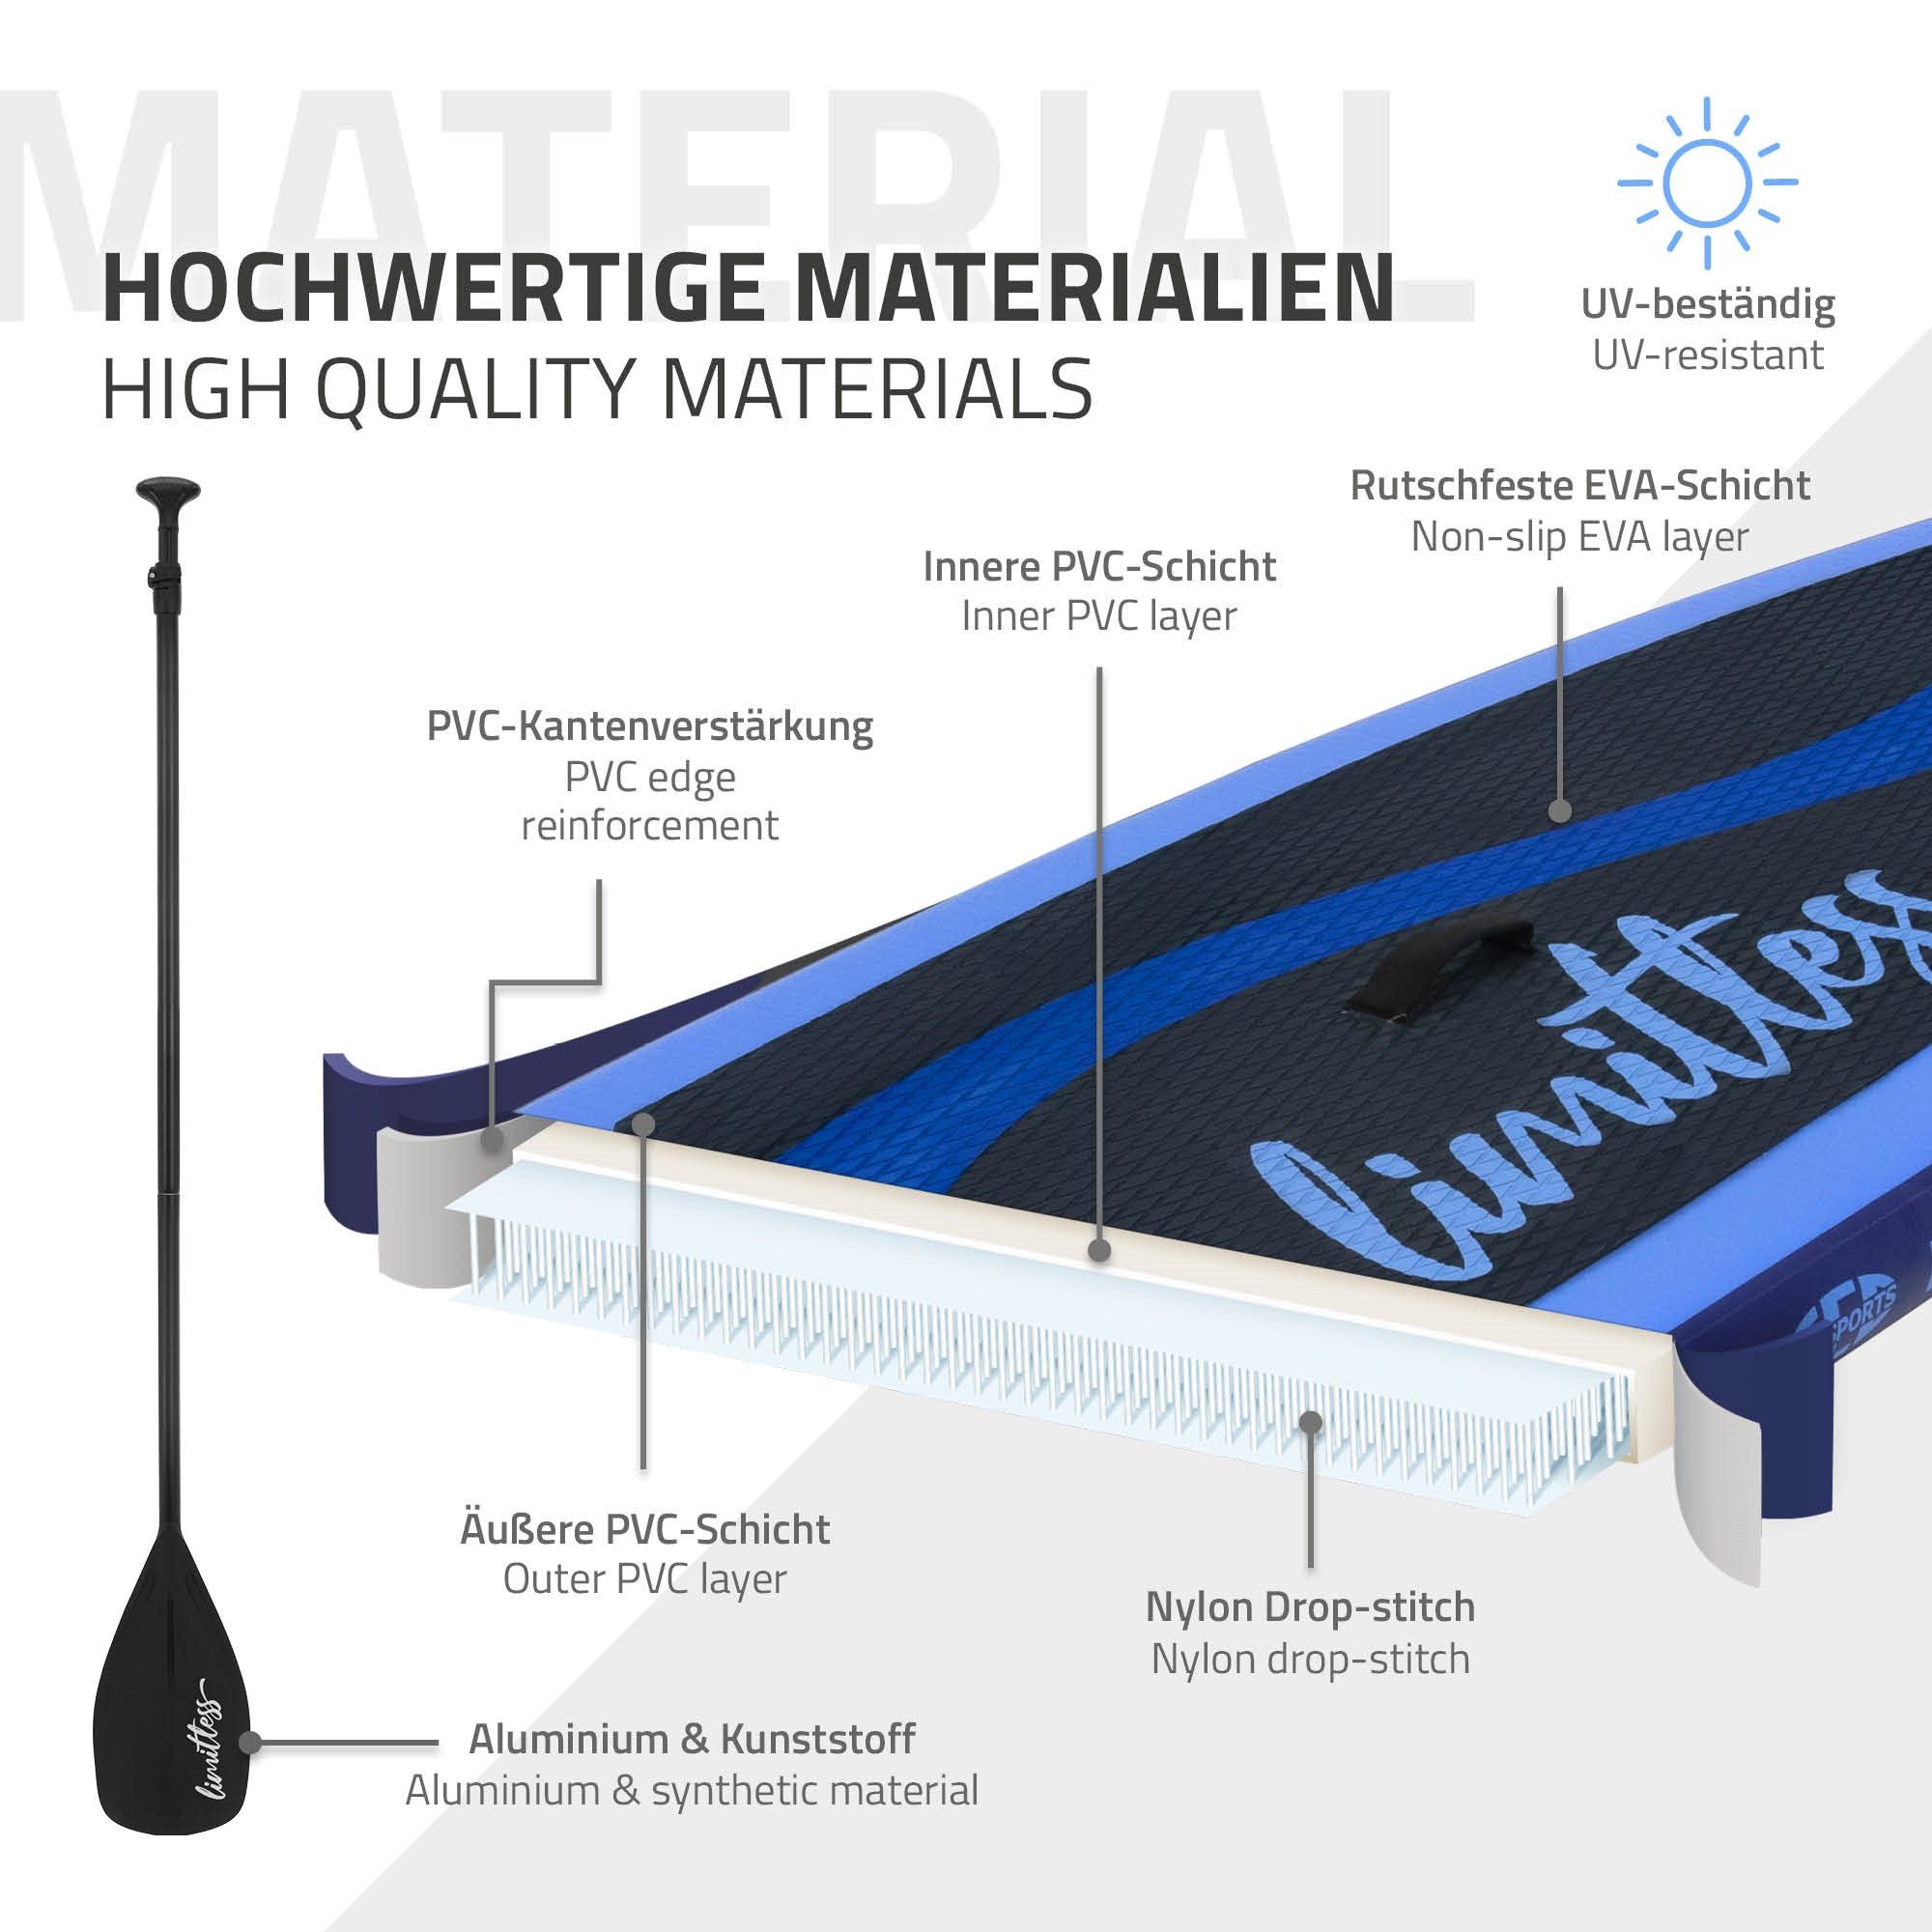 ECD Germany SUP-Board Aufblasbares Limitless Zubehör Paddle 120kg 308x76x10cm Board Set bis PVC Surfboard, Komplett Paddelboard Blau Up Tragetasche Stand